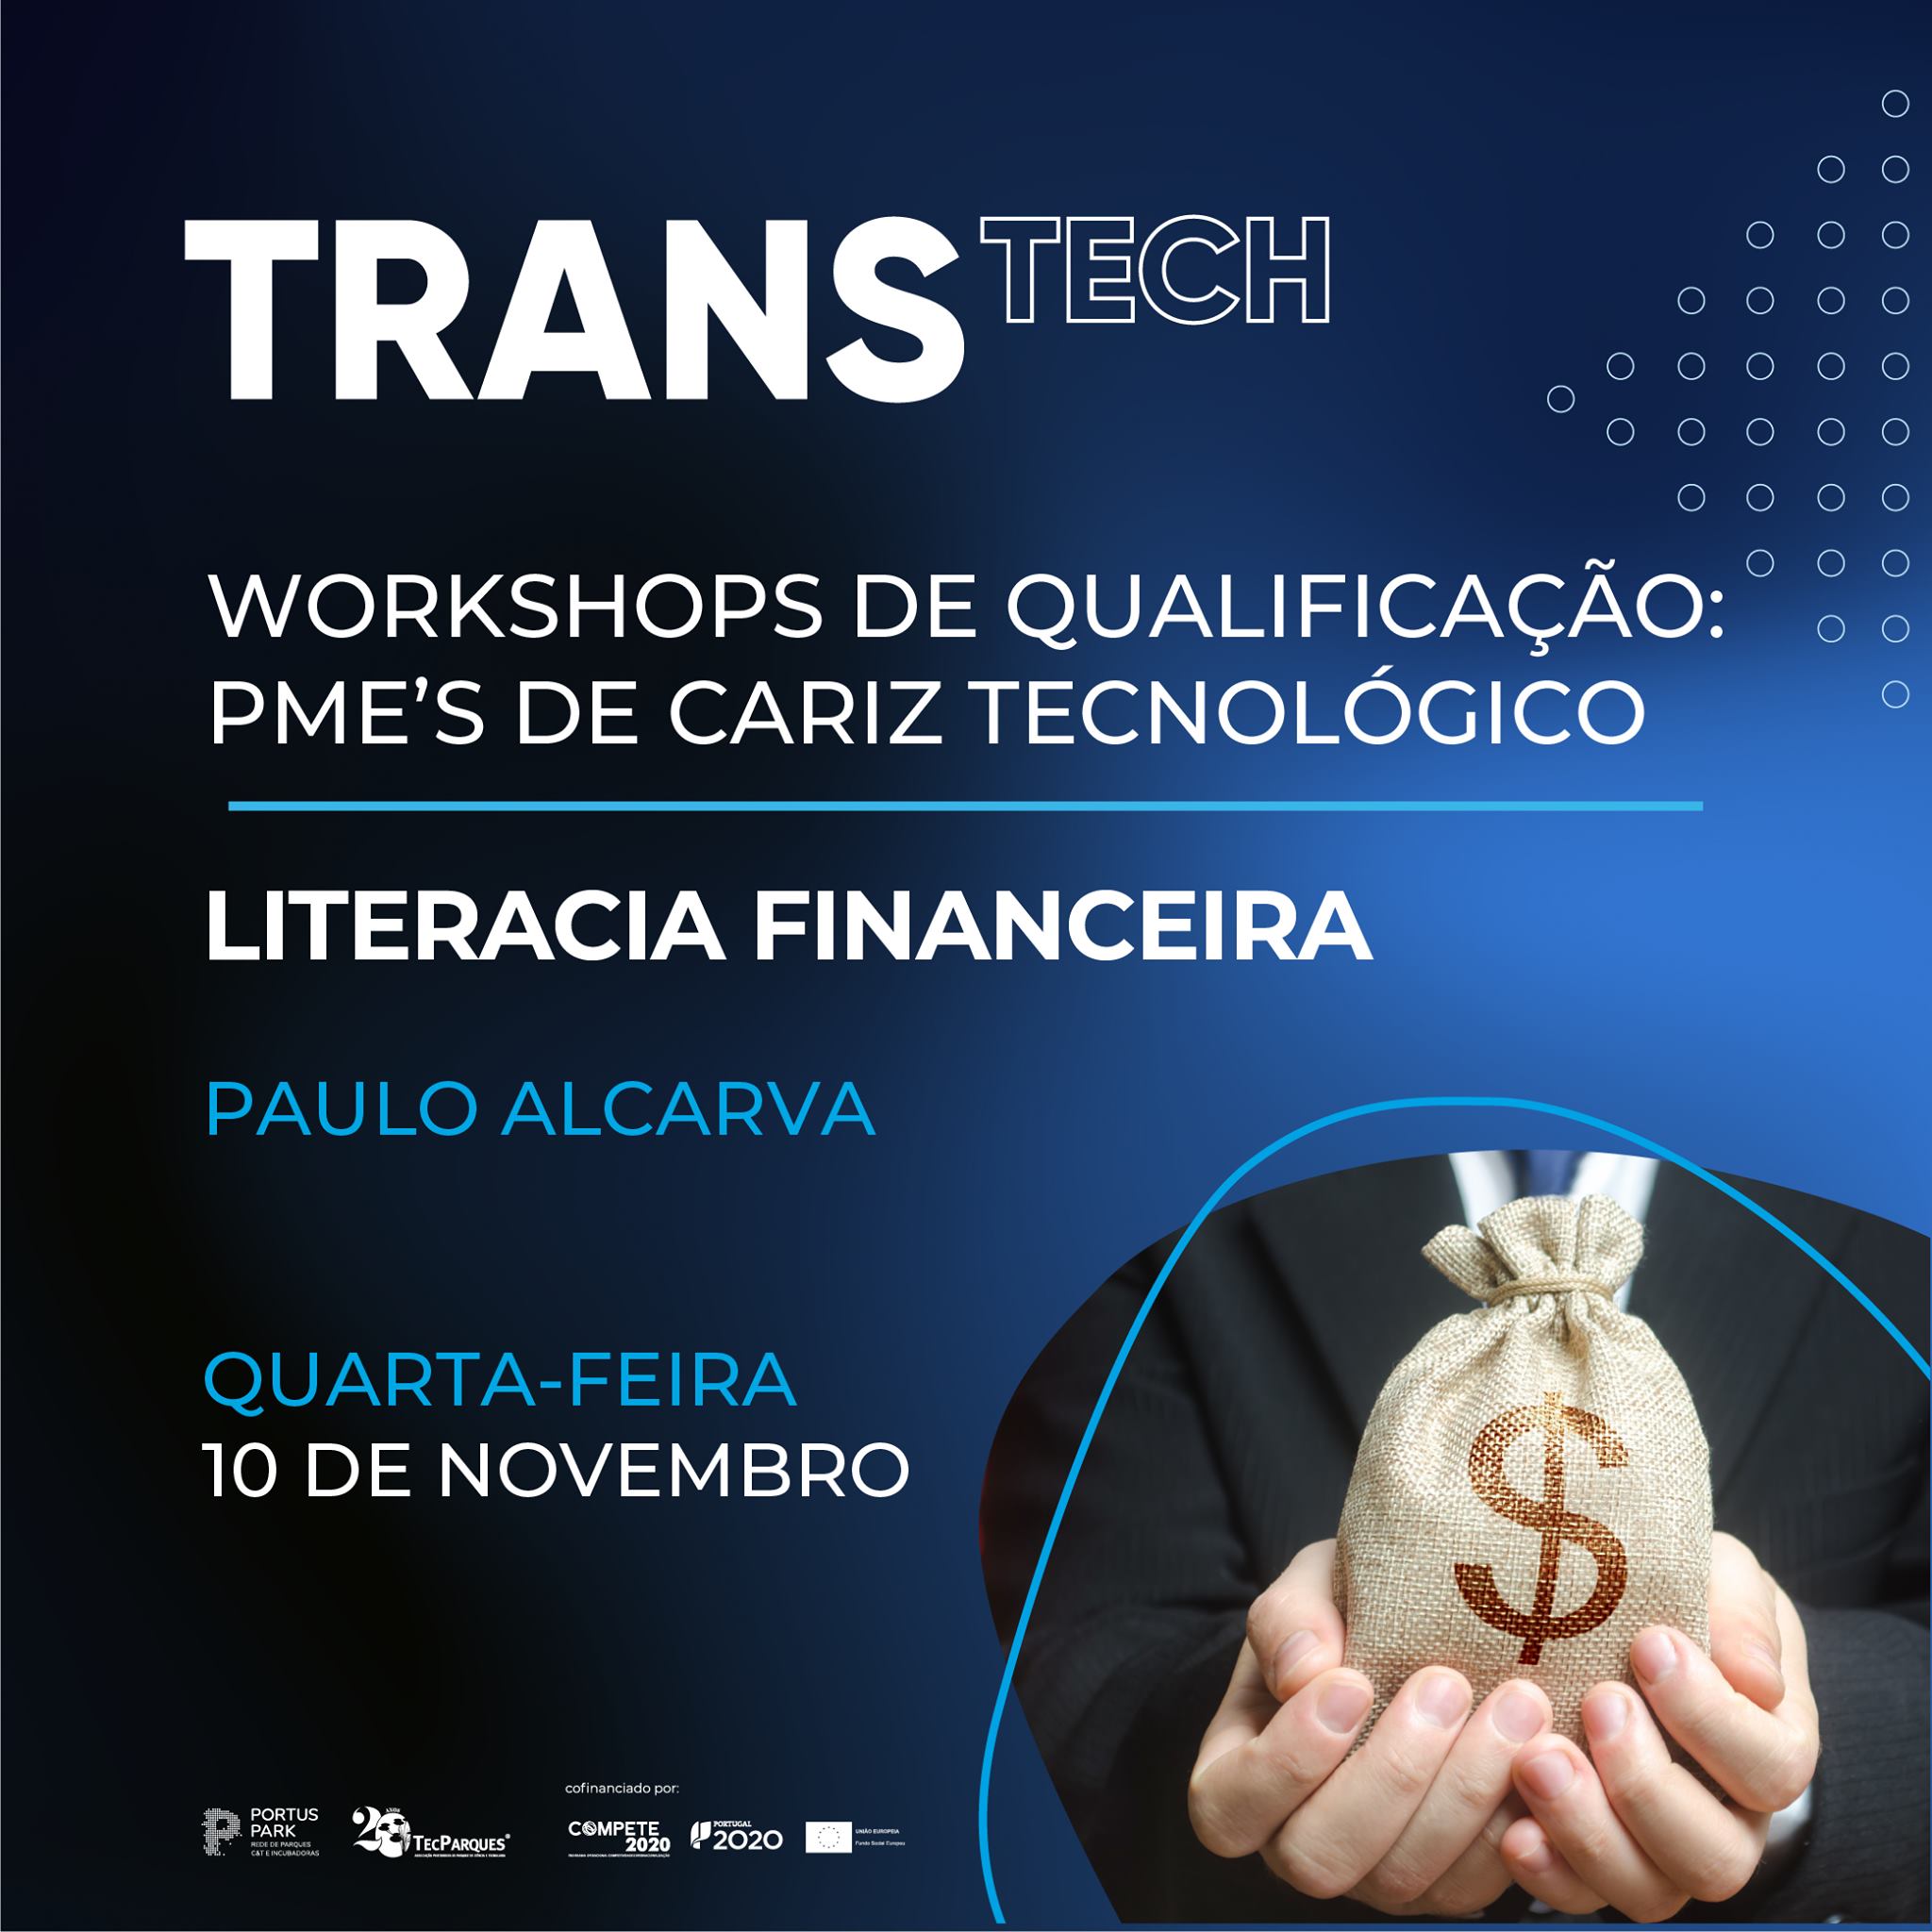 Workshop "Literacia Financeira" - Projeto TRANSTECH